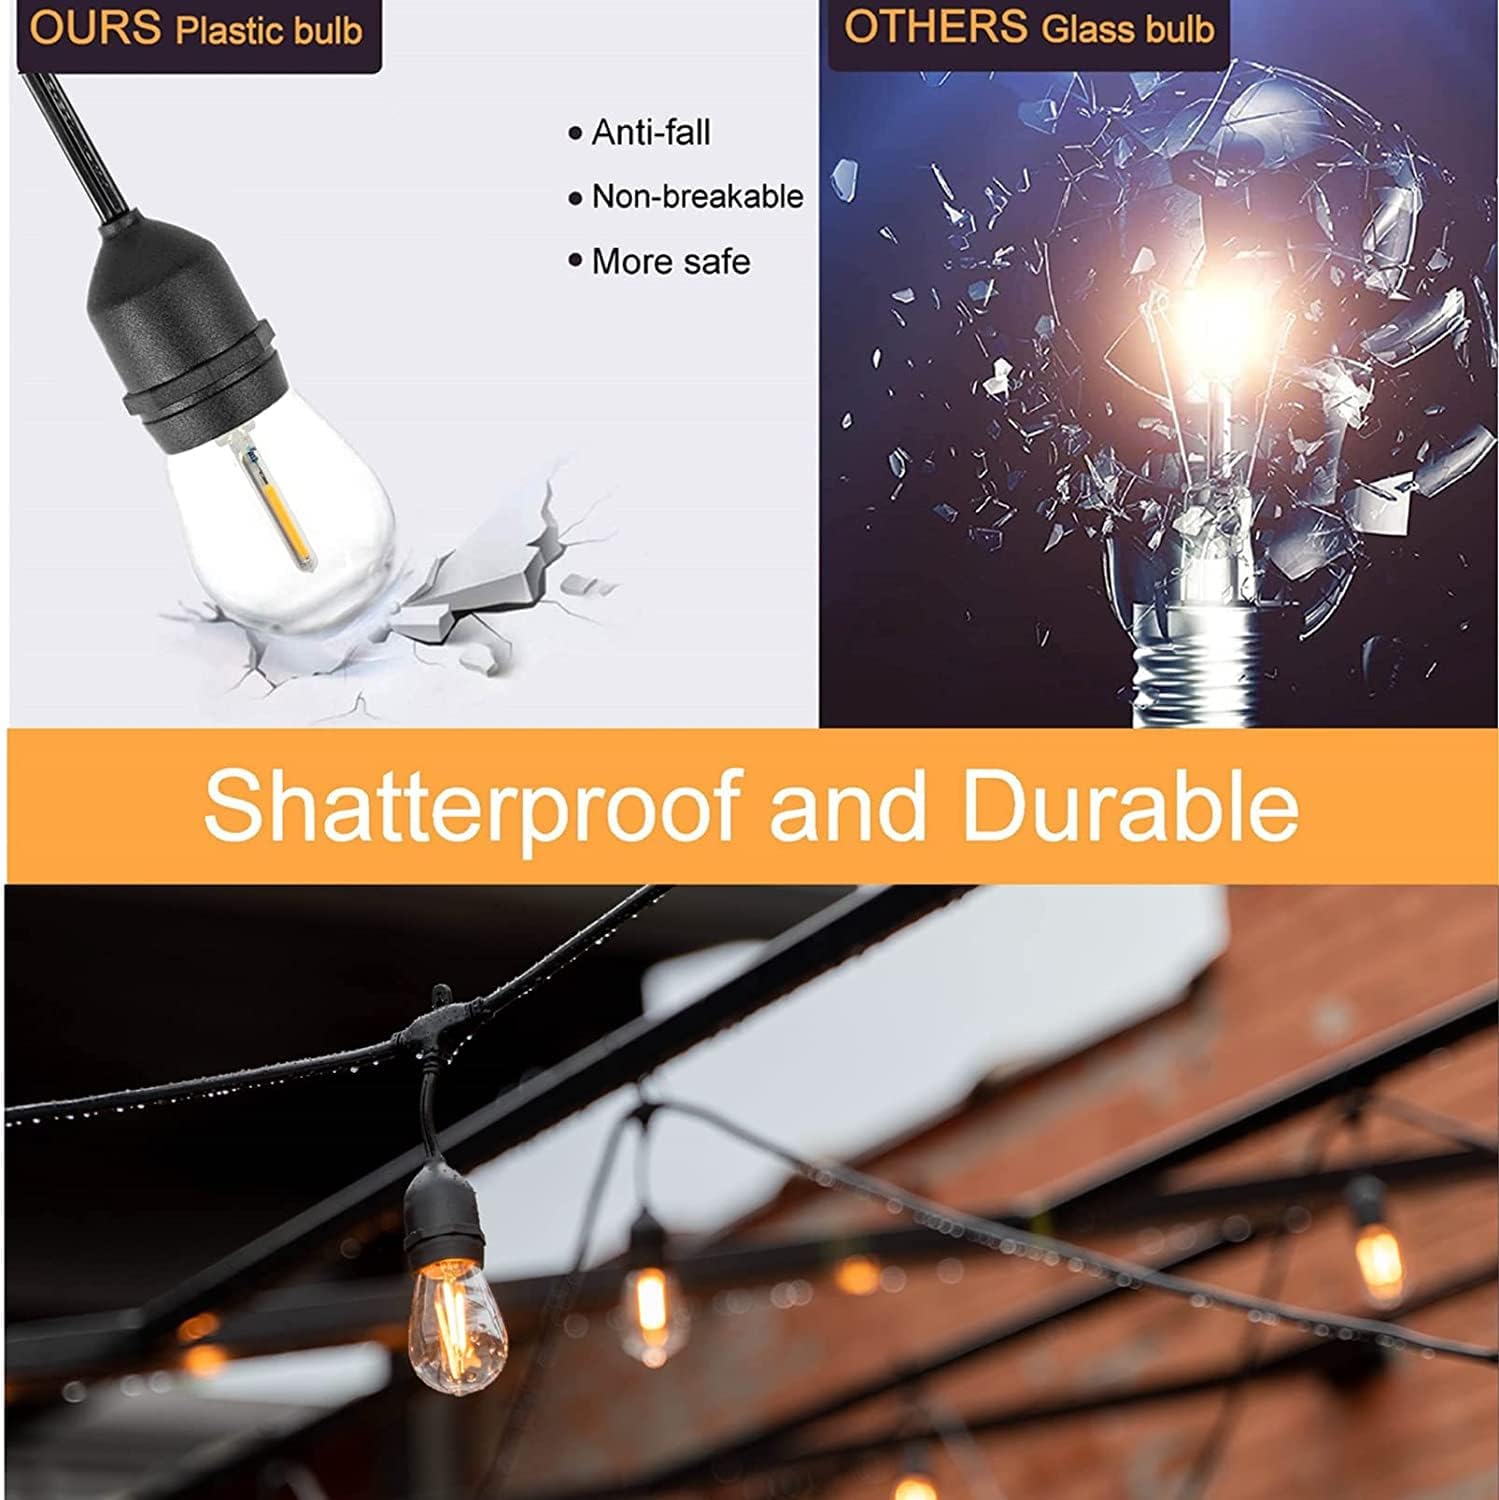  Outdoor Lights Mains Powered, 48FT LED S14 Garden Festoon Lighting with 15 LED Bulbs, Shatterproof Festoon Lights